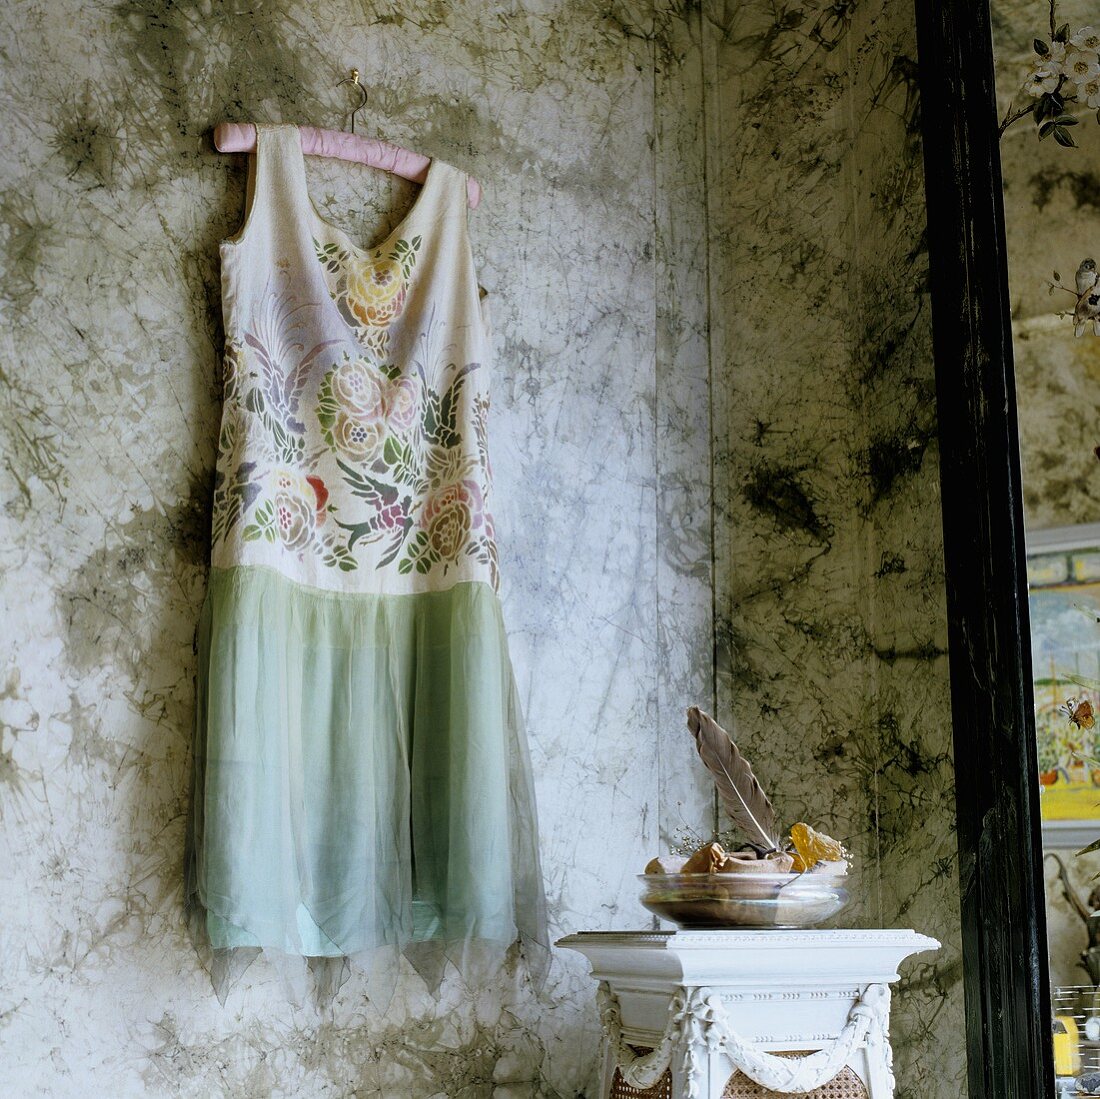 A summer dress on a hanger hanging on a wall